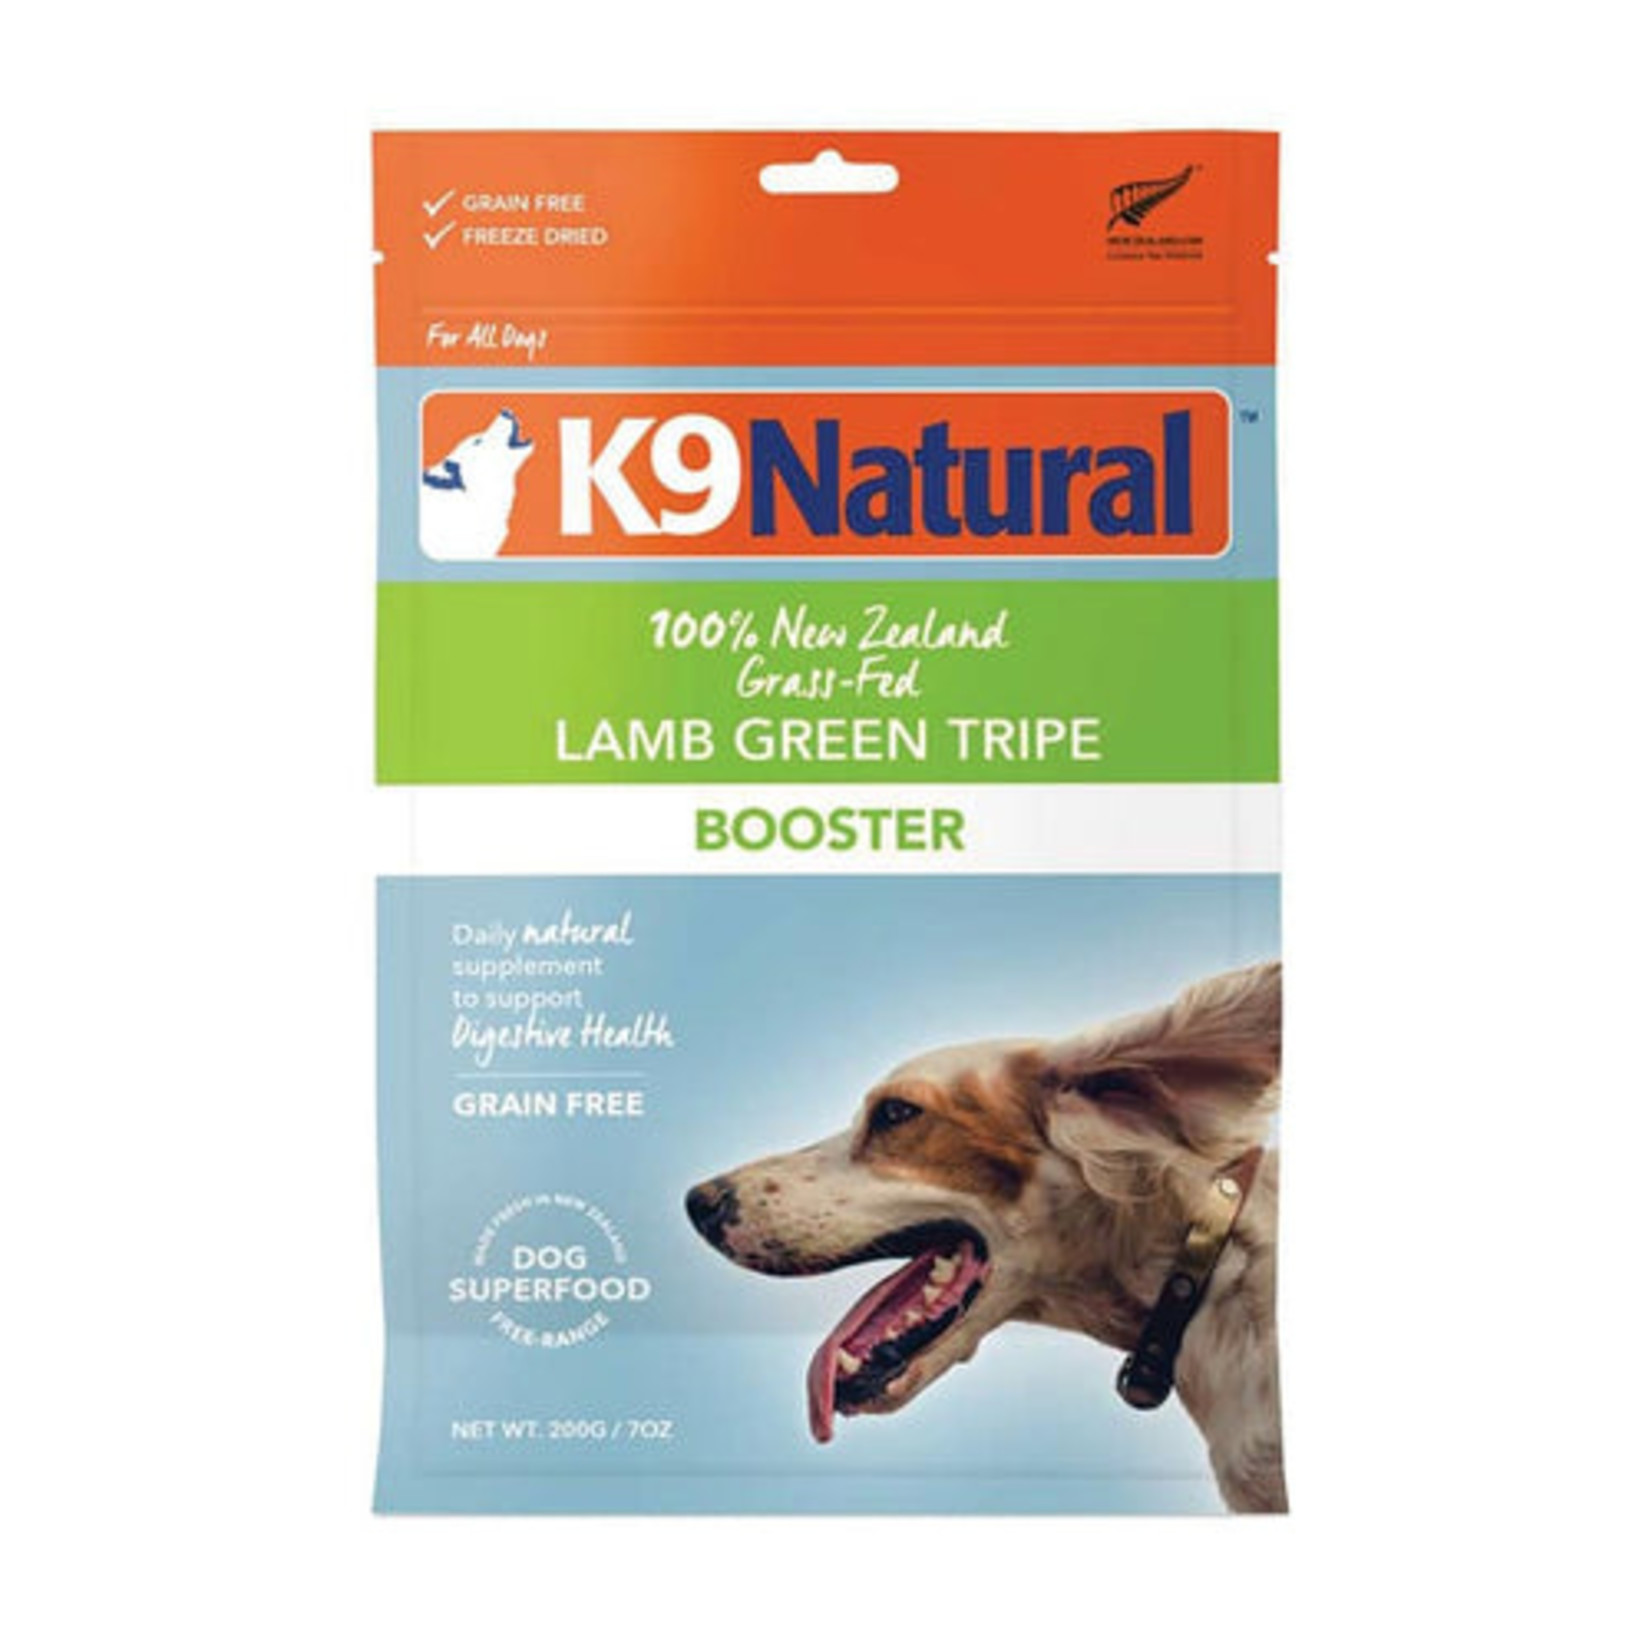 K9 Natural/Feline Natural K9 Natural Freeze Dried Booster Lamb Green Tripe 200g